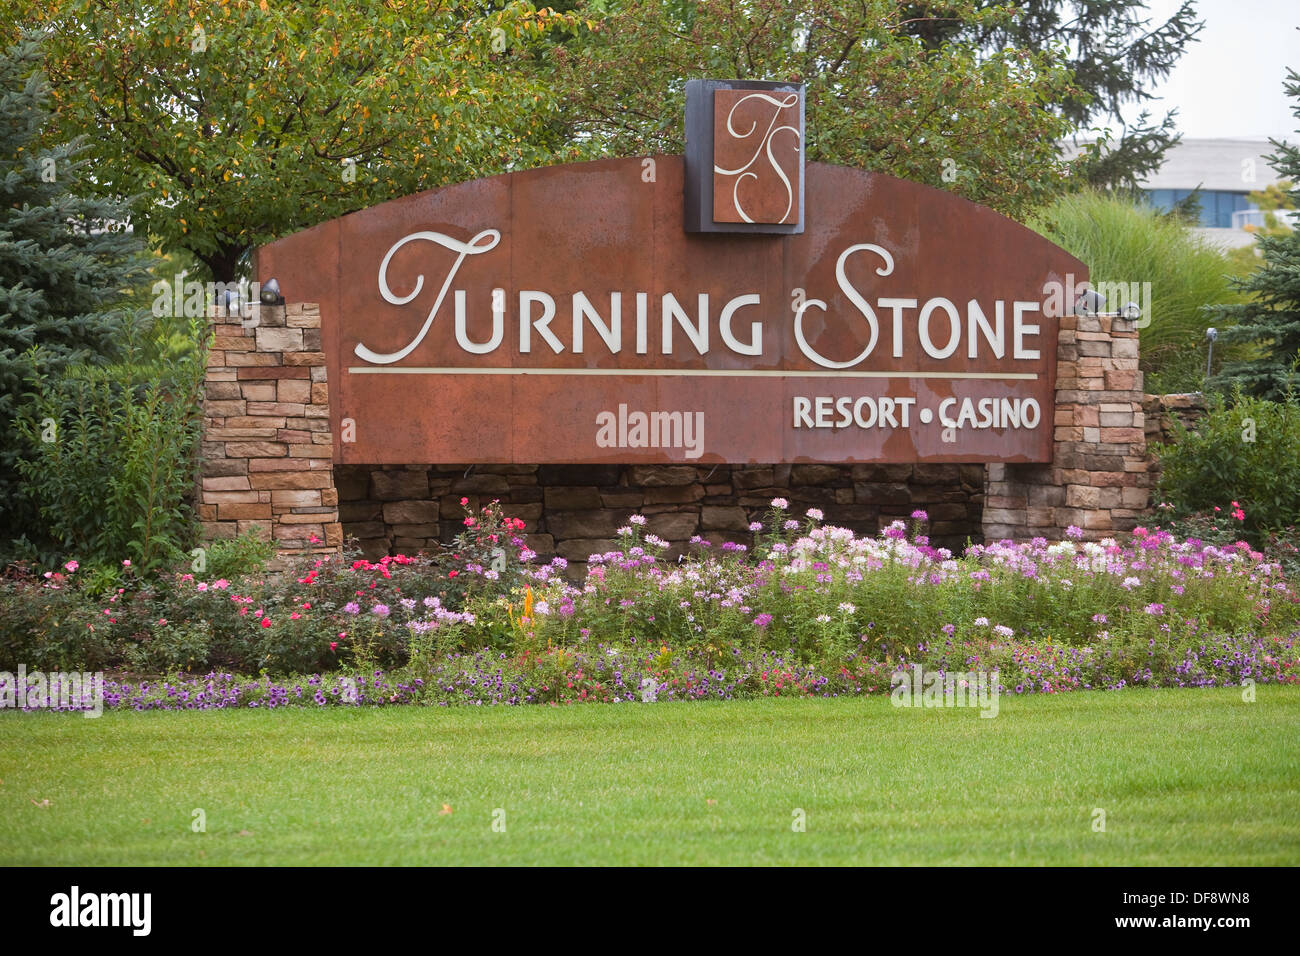 turning stone resort casino address